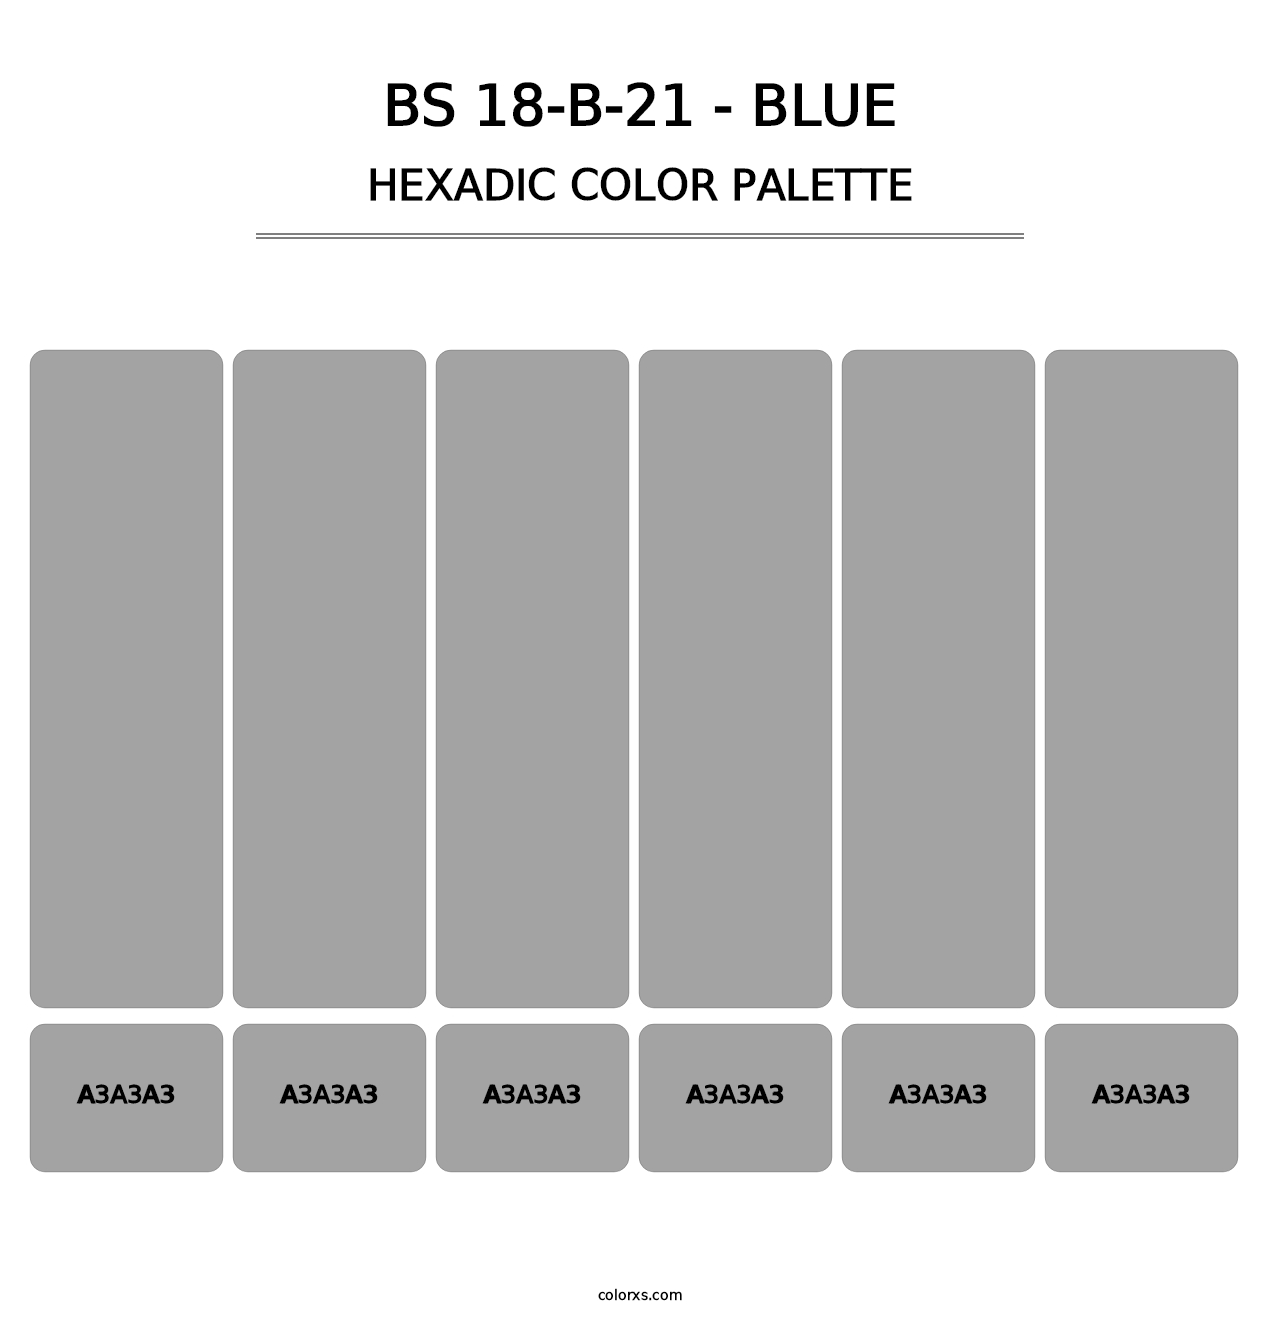 BS 18-B-21 - Blue - Hexadic Color Palette